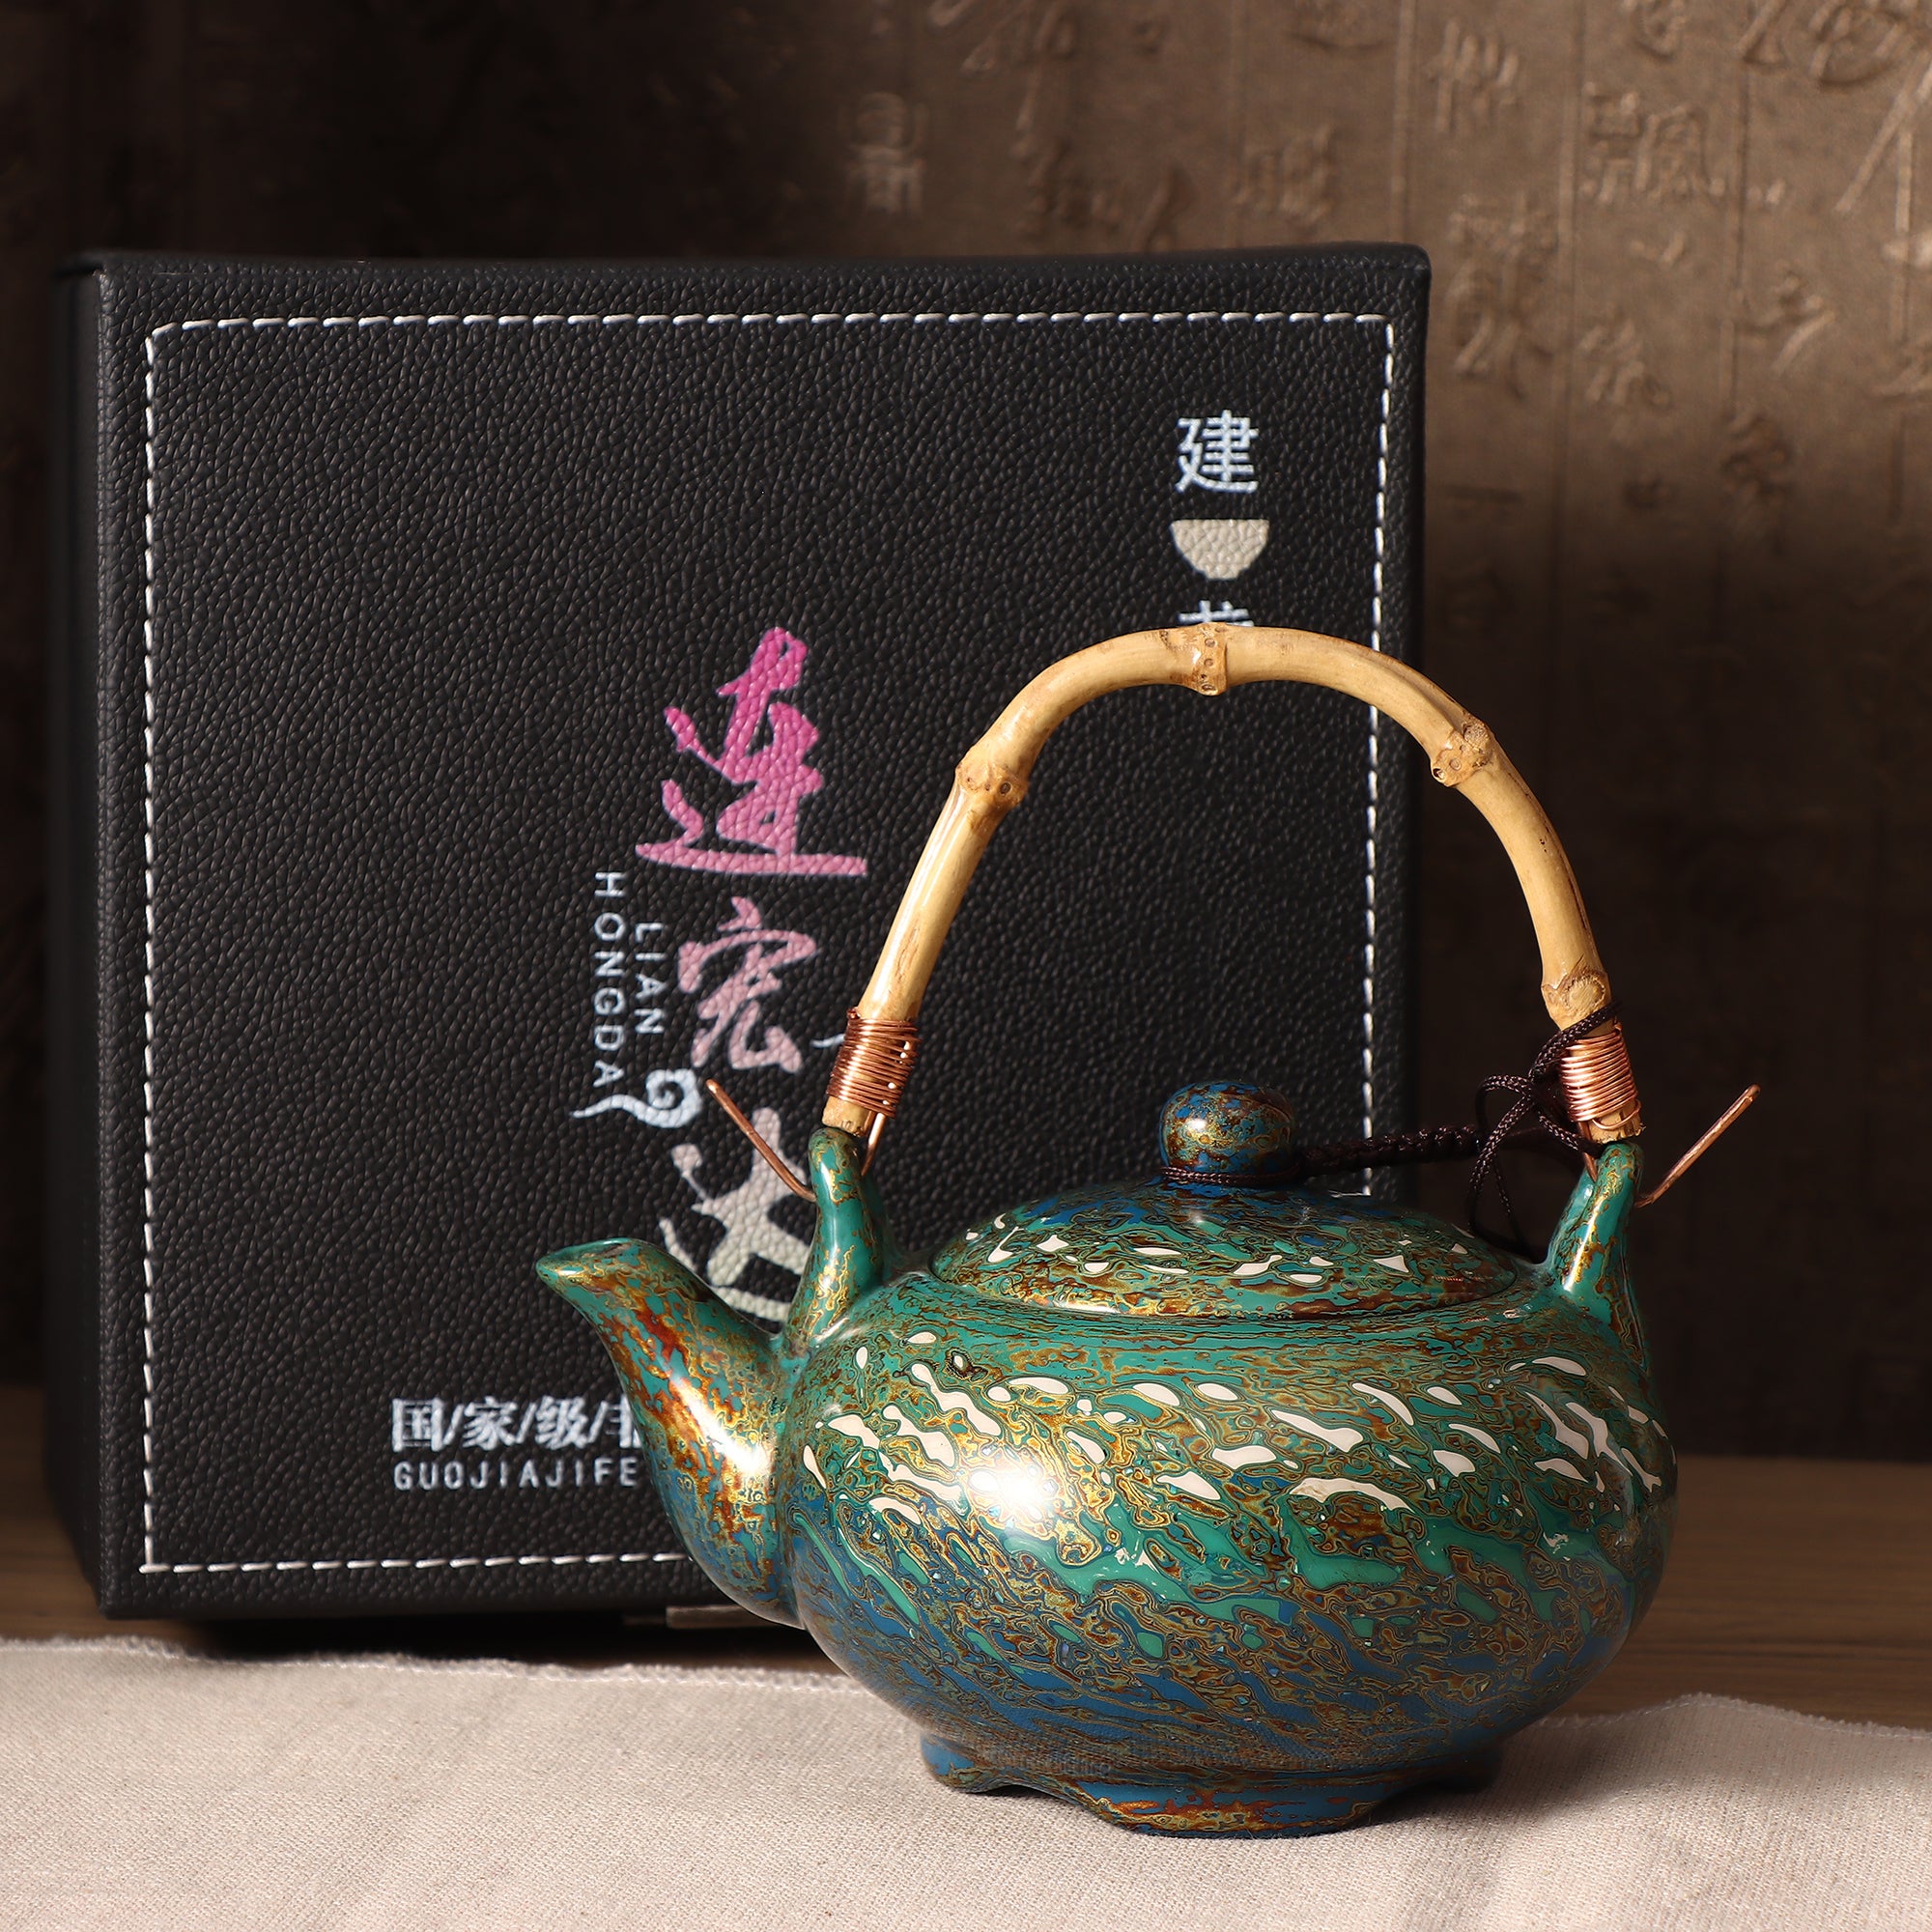 Hongda Lian's Daqi "Tilang" Teapot